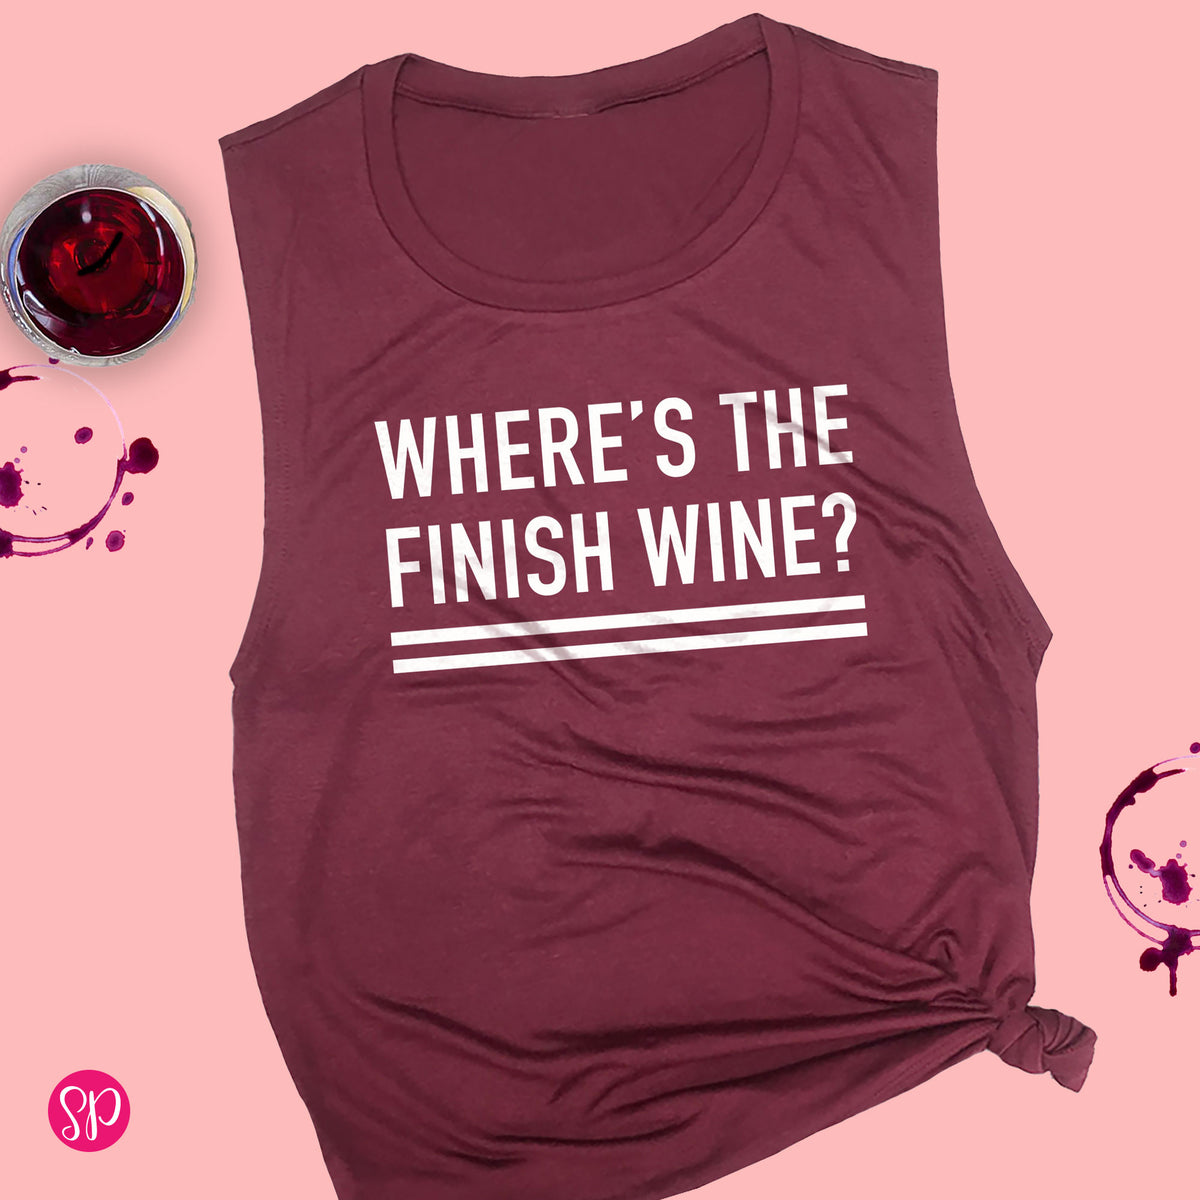 Where's The Finish Wine Funny Running Run Race Group Matching Graphic Tank Top Tee Shirt Women